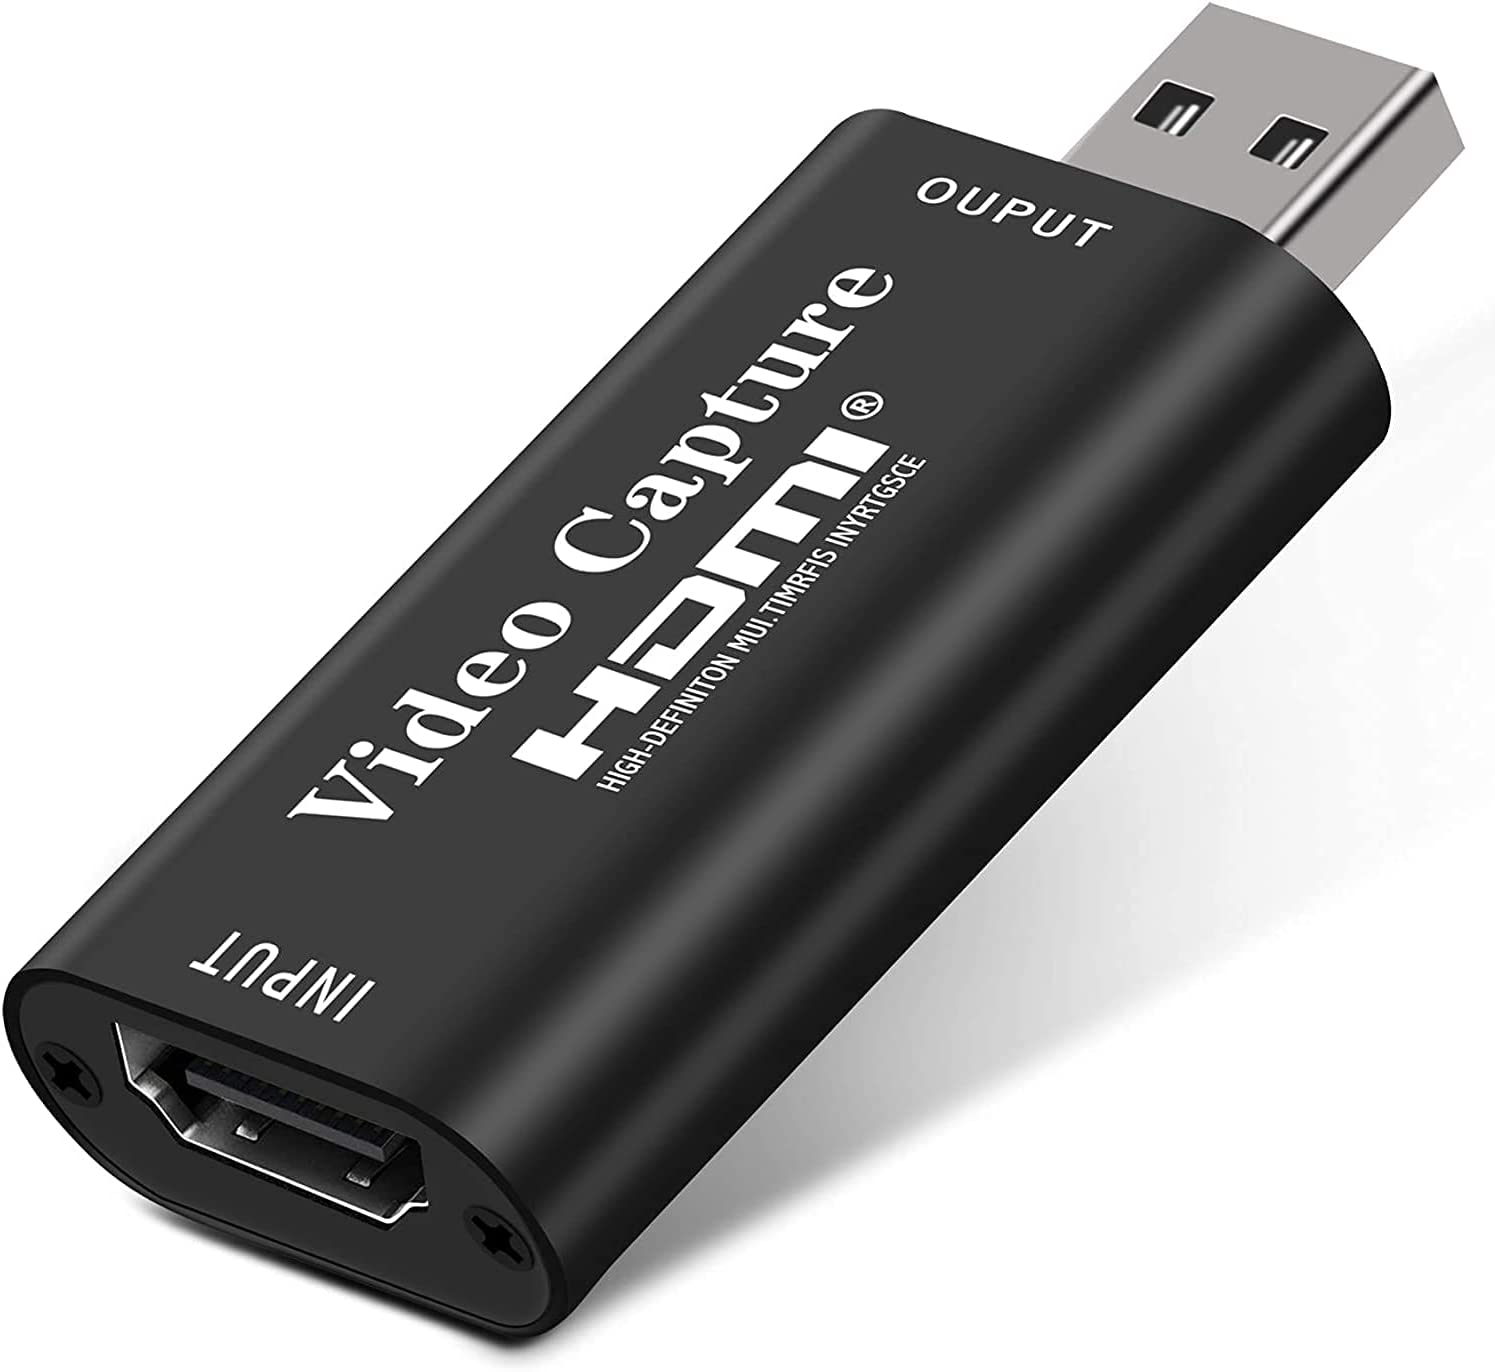 Amazon.com: DIGITNOW HDMI Video Capture Card, 4K HDMI to USB 2.0 Video Audio Converter, USB 2.0 Full HD 1080p Capture Card, HDMI Video Game Capture $8.99